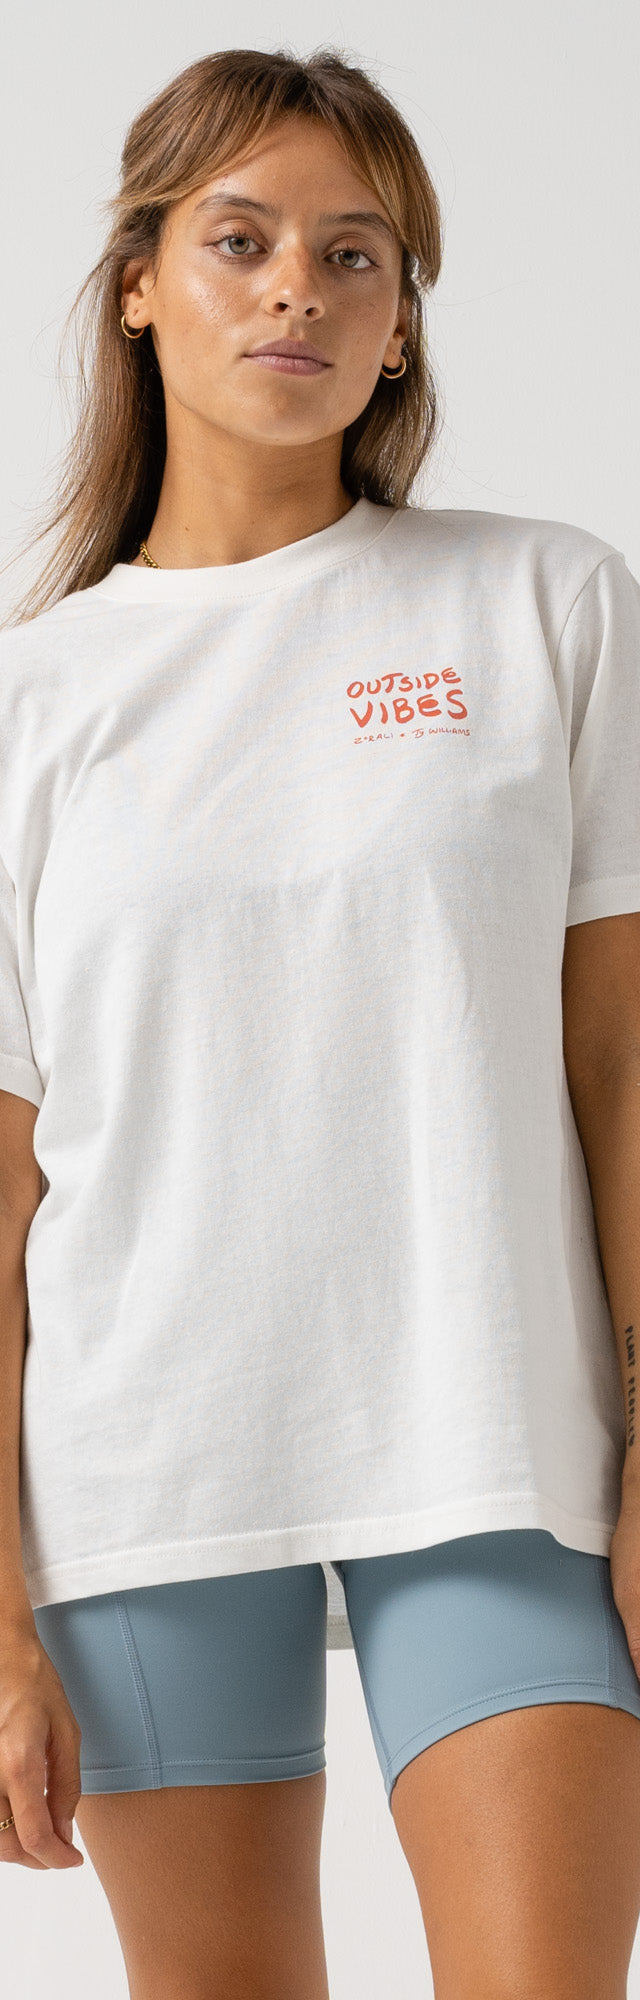 Outside Vibes T-Shirt White